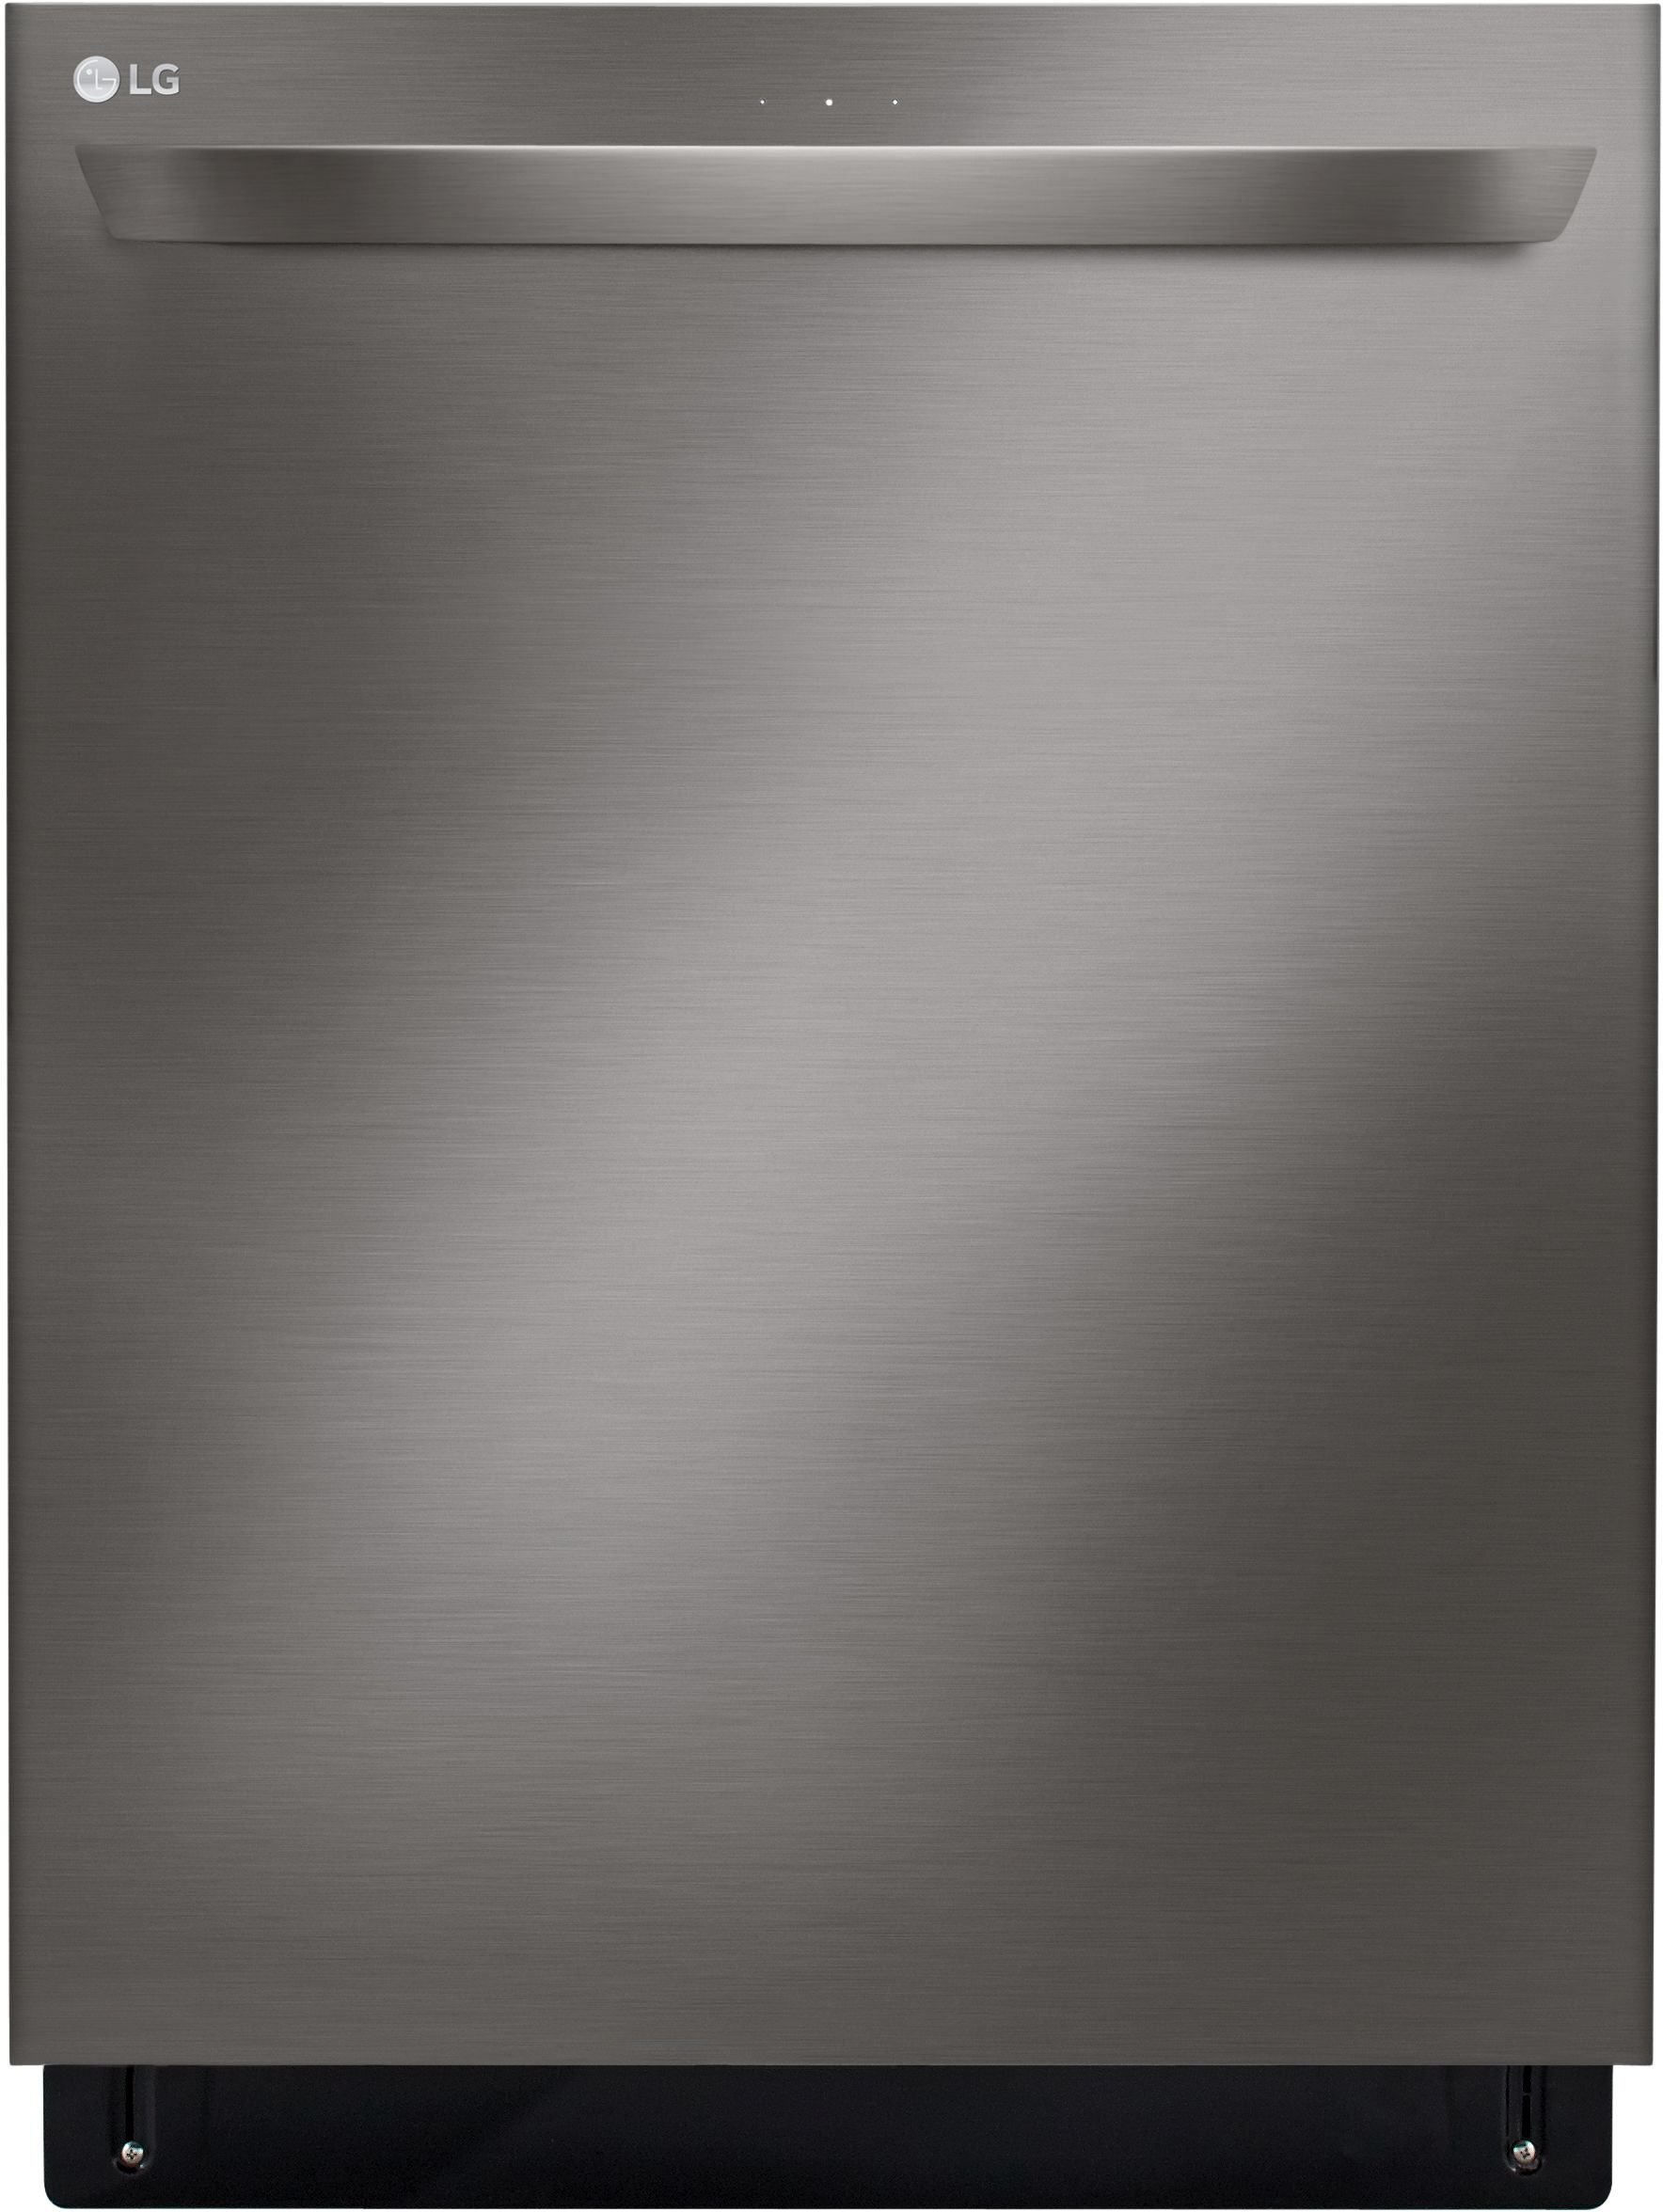 black stainless steel dishwasher